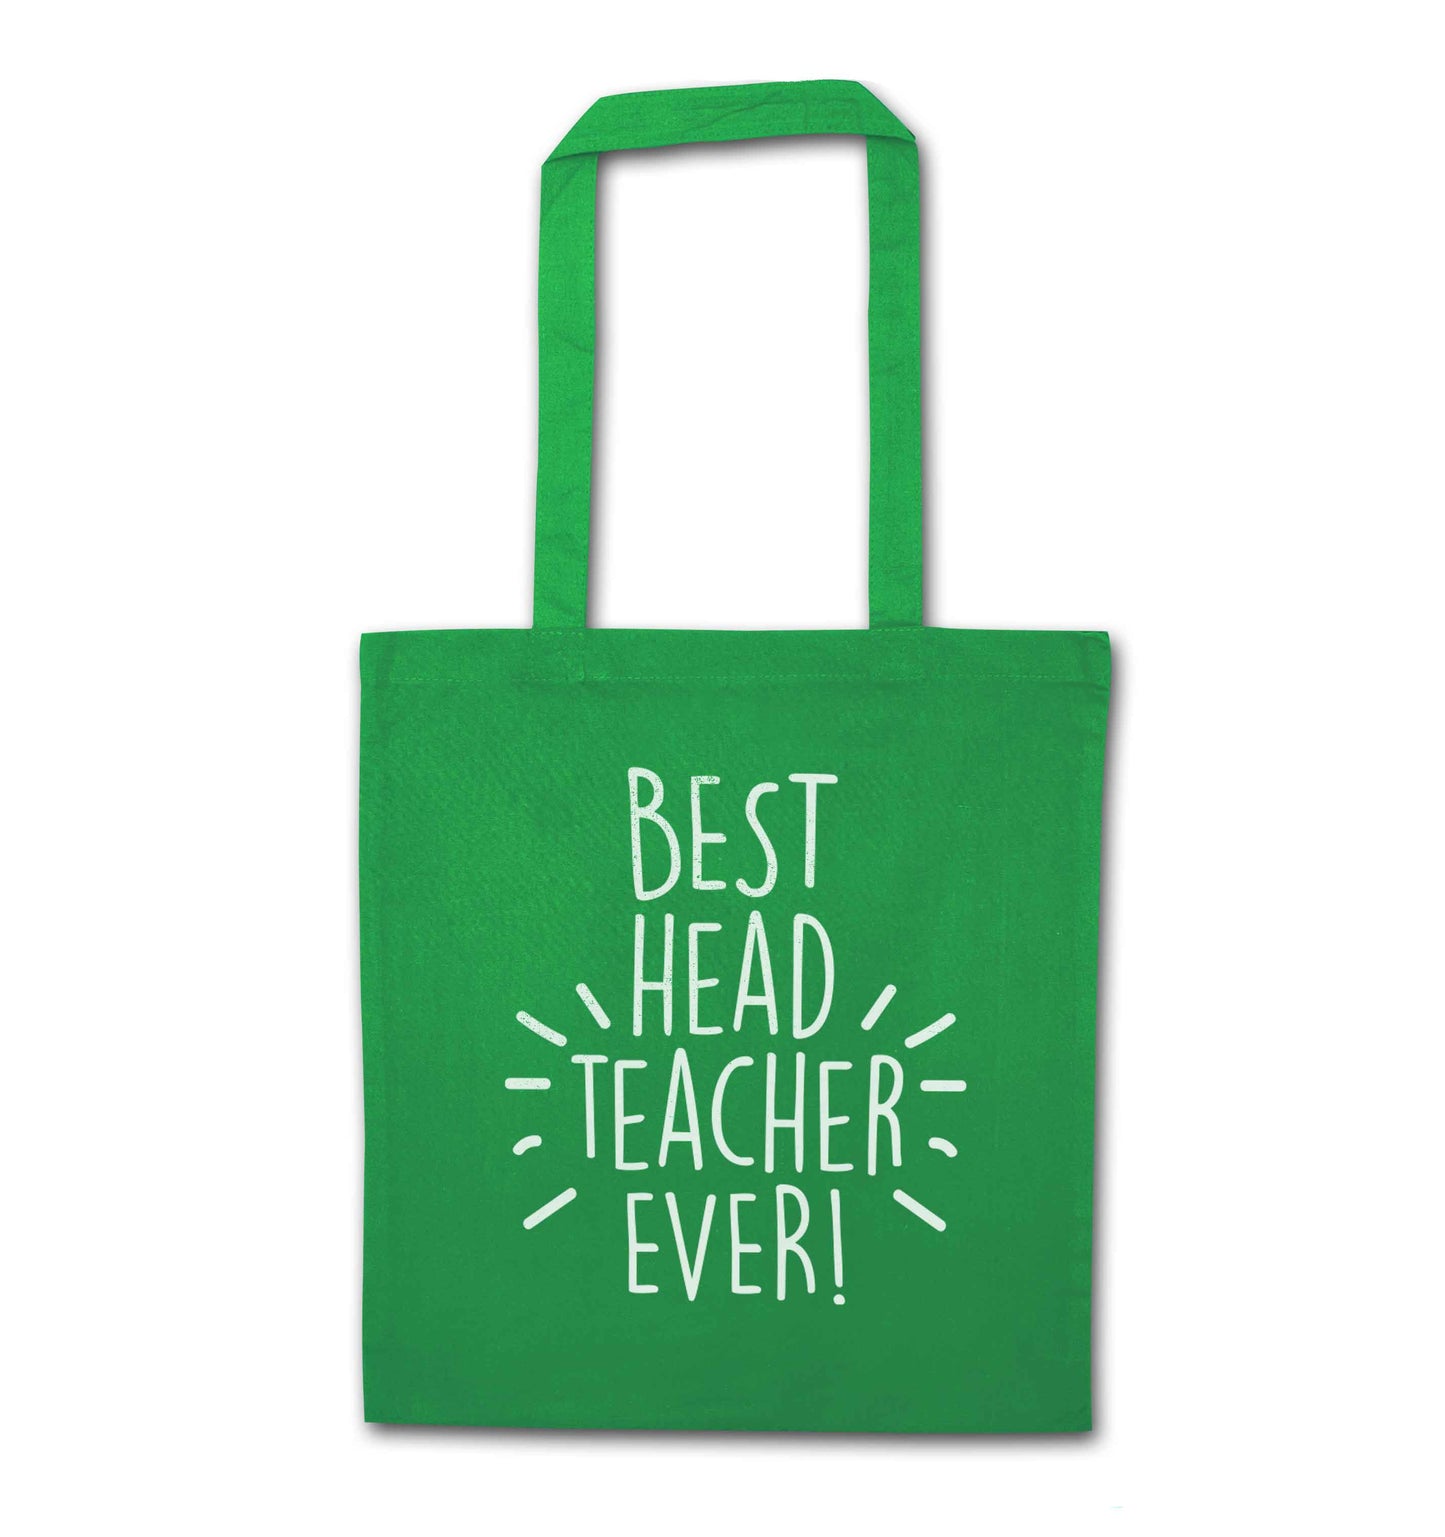 Best head teacher ever! green tote bag